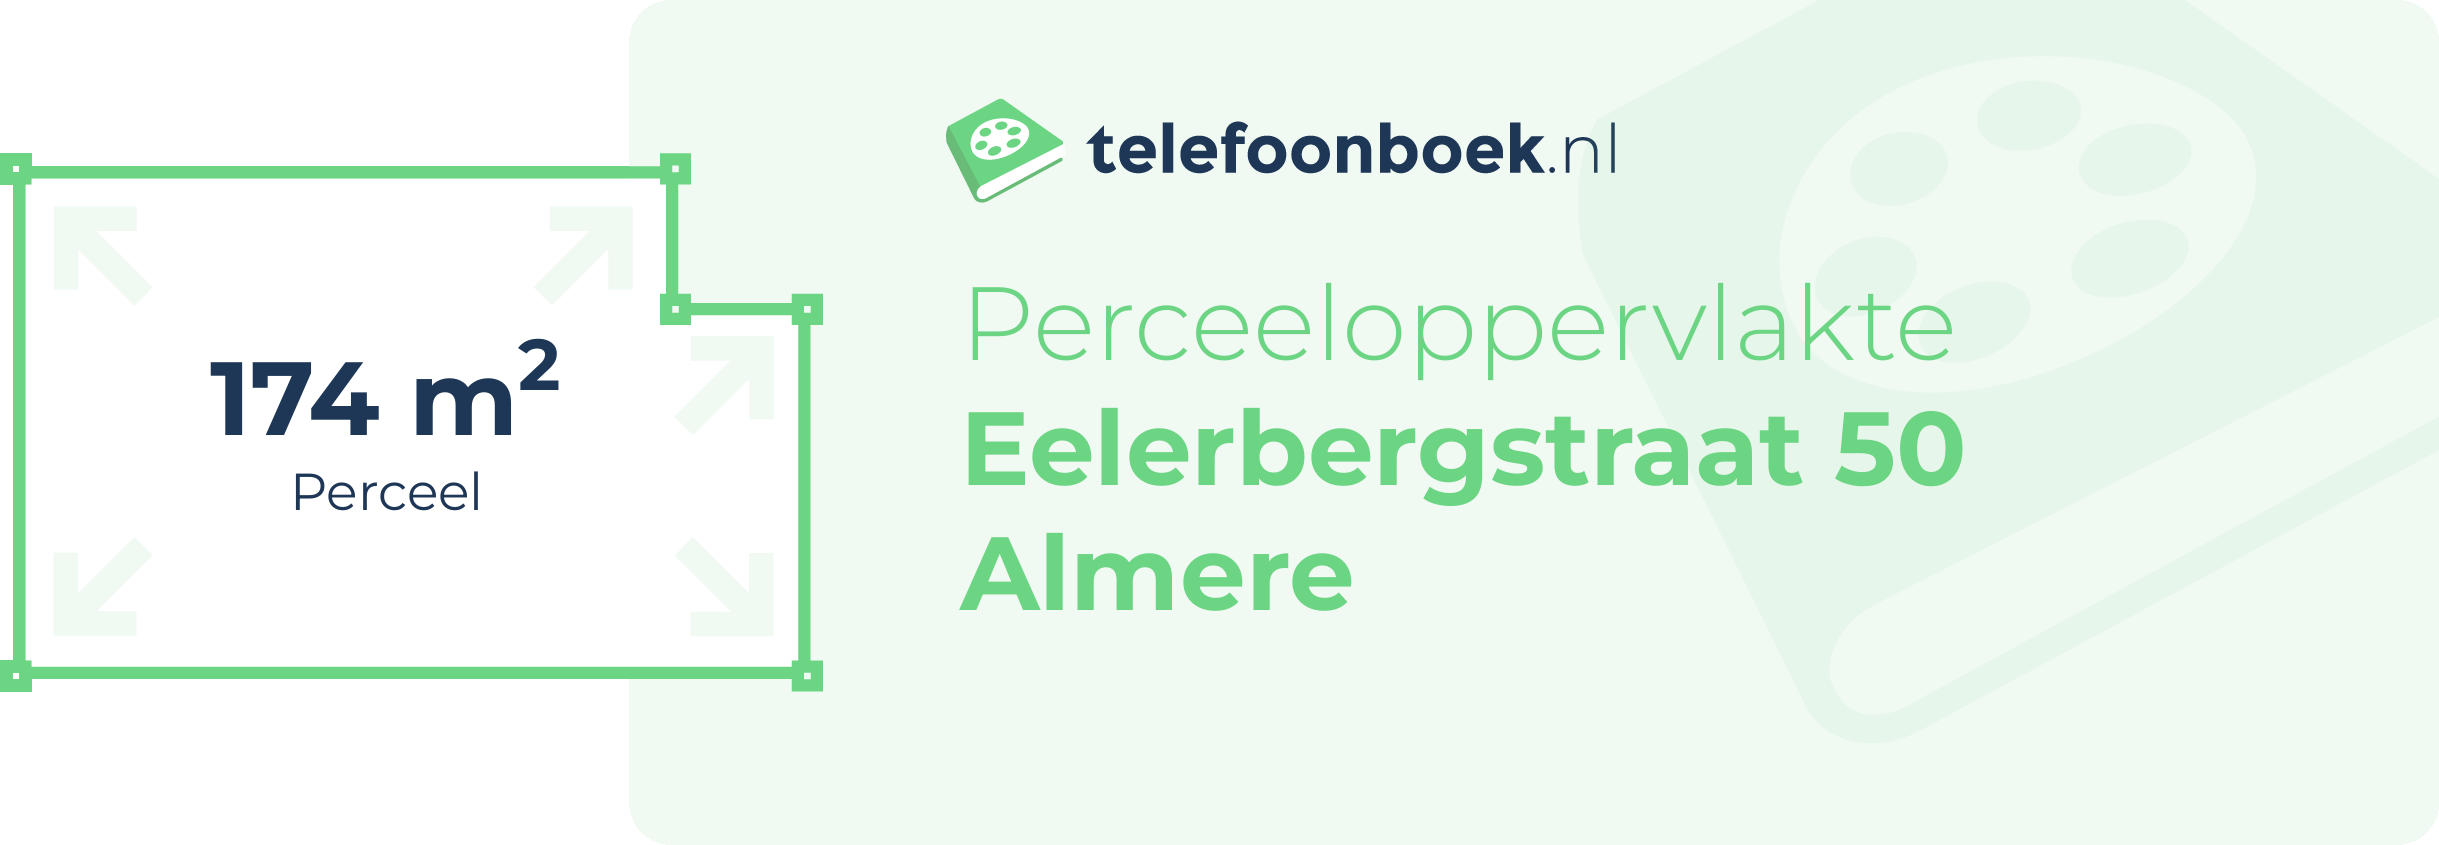 Perceeloppervlakte Eelerbergstraat 50 Almere